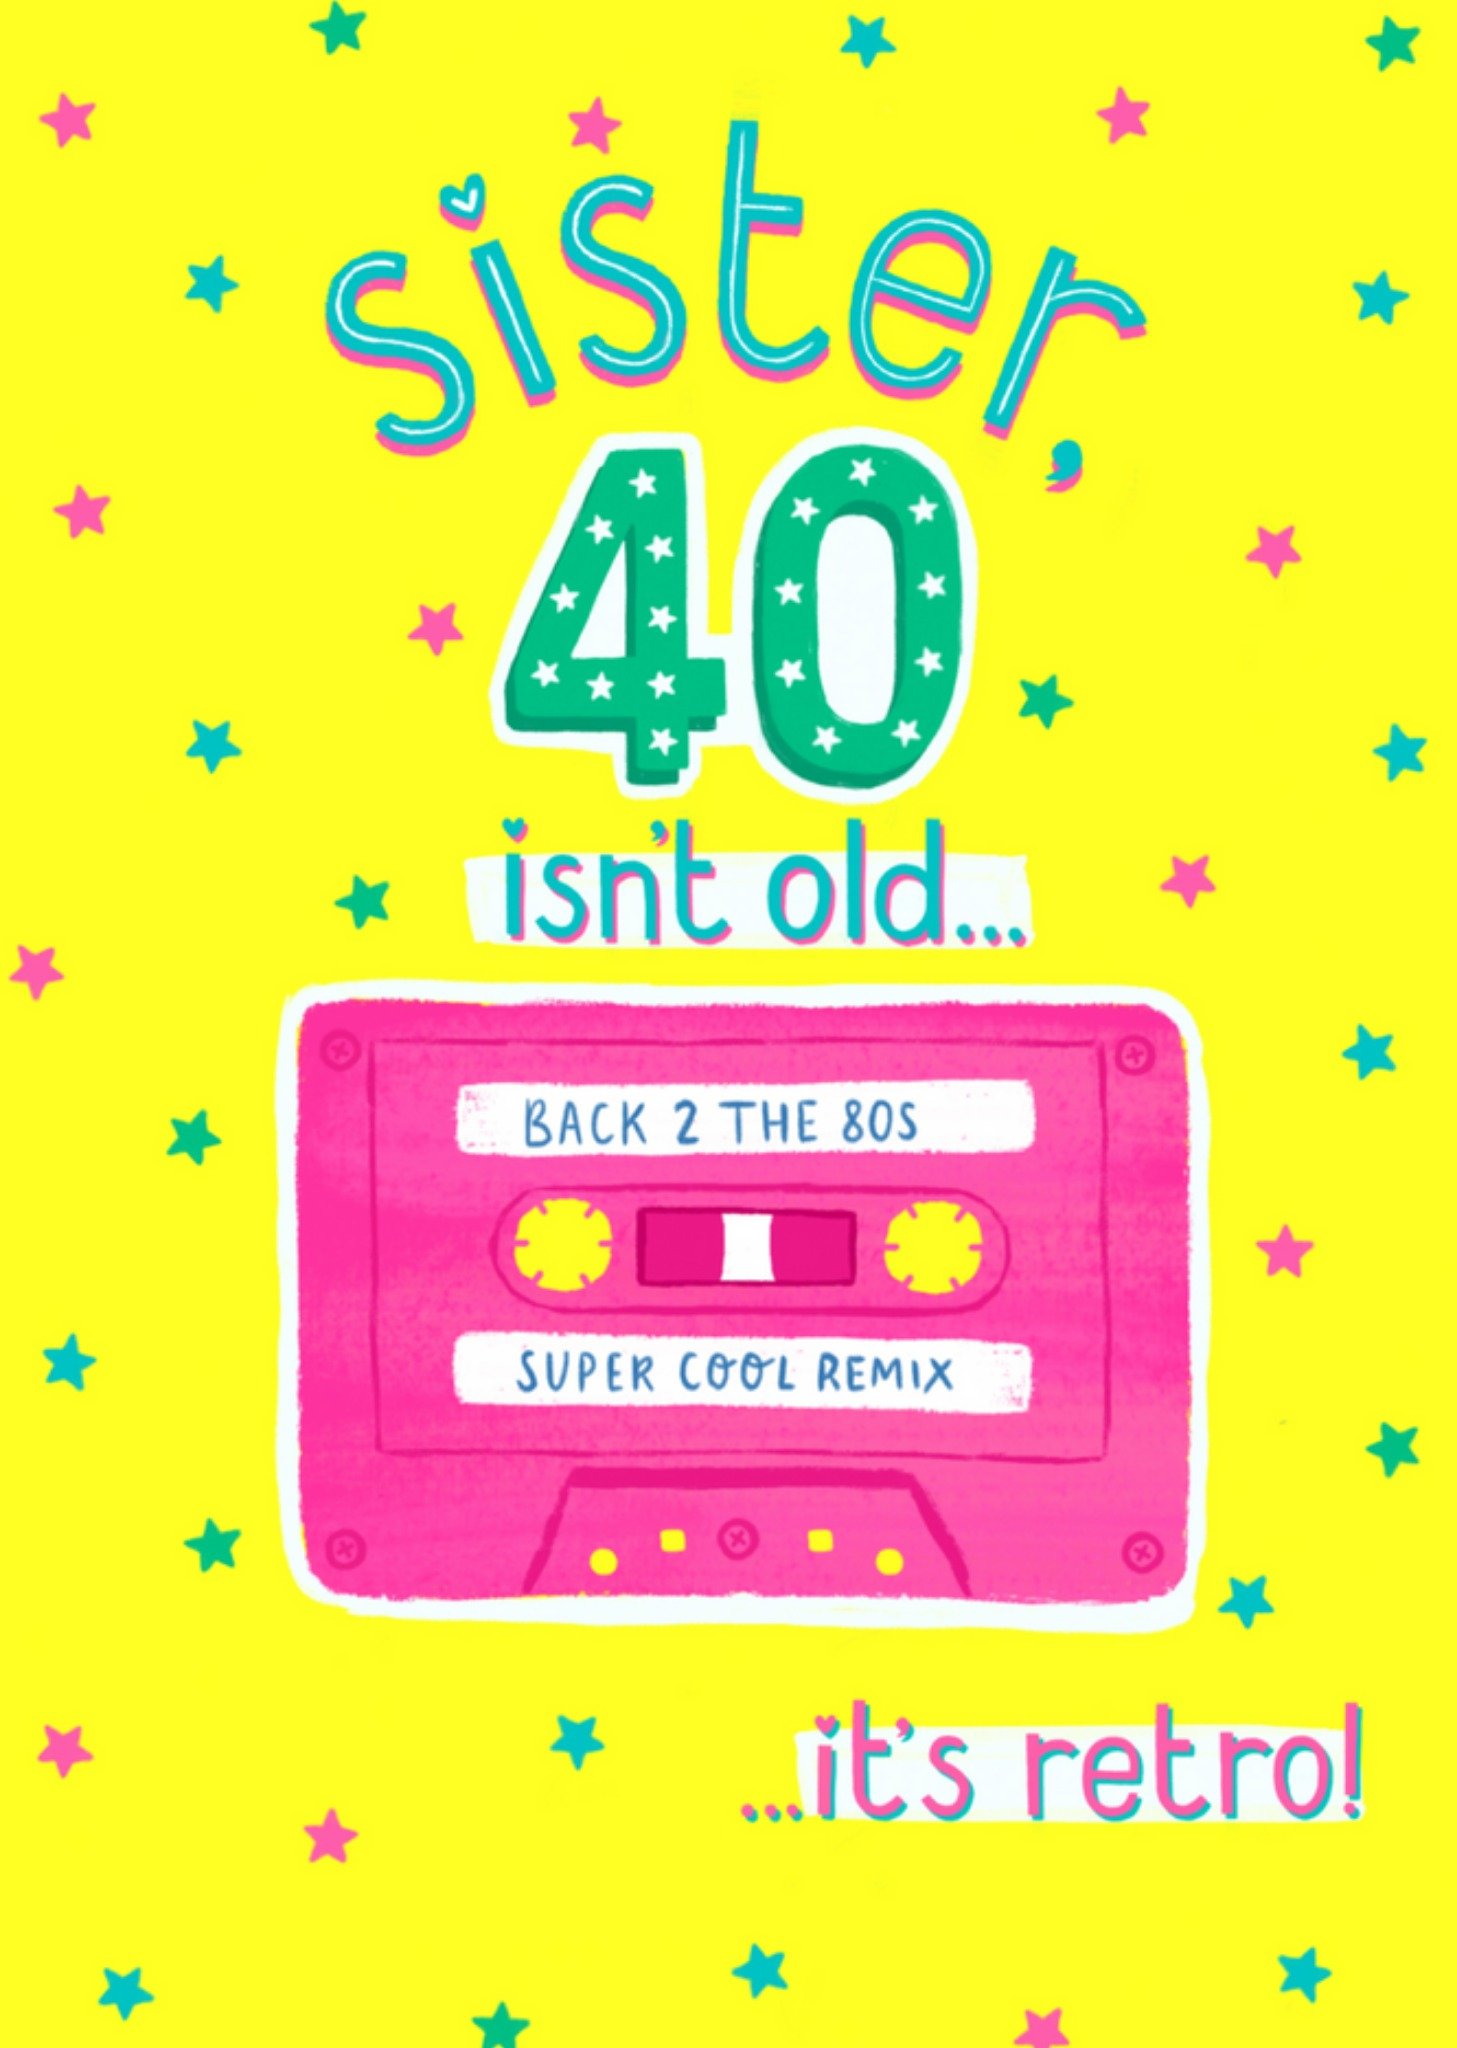 Verjaardagskaart - cassette sister 40